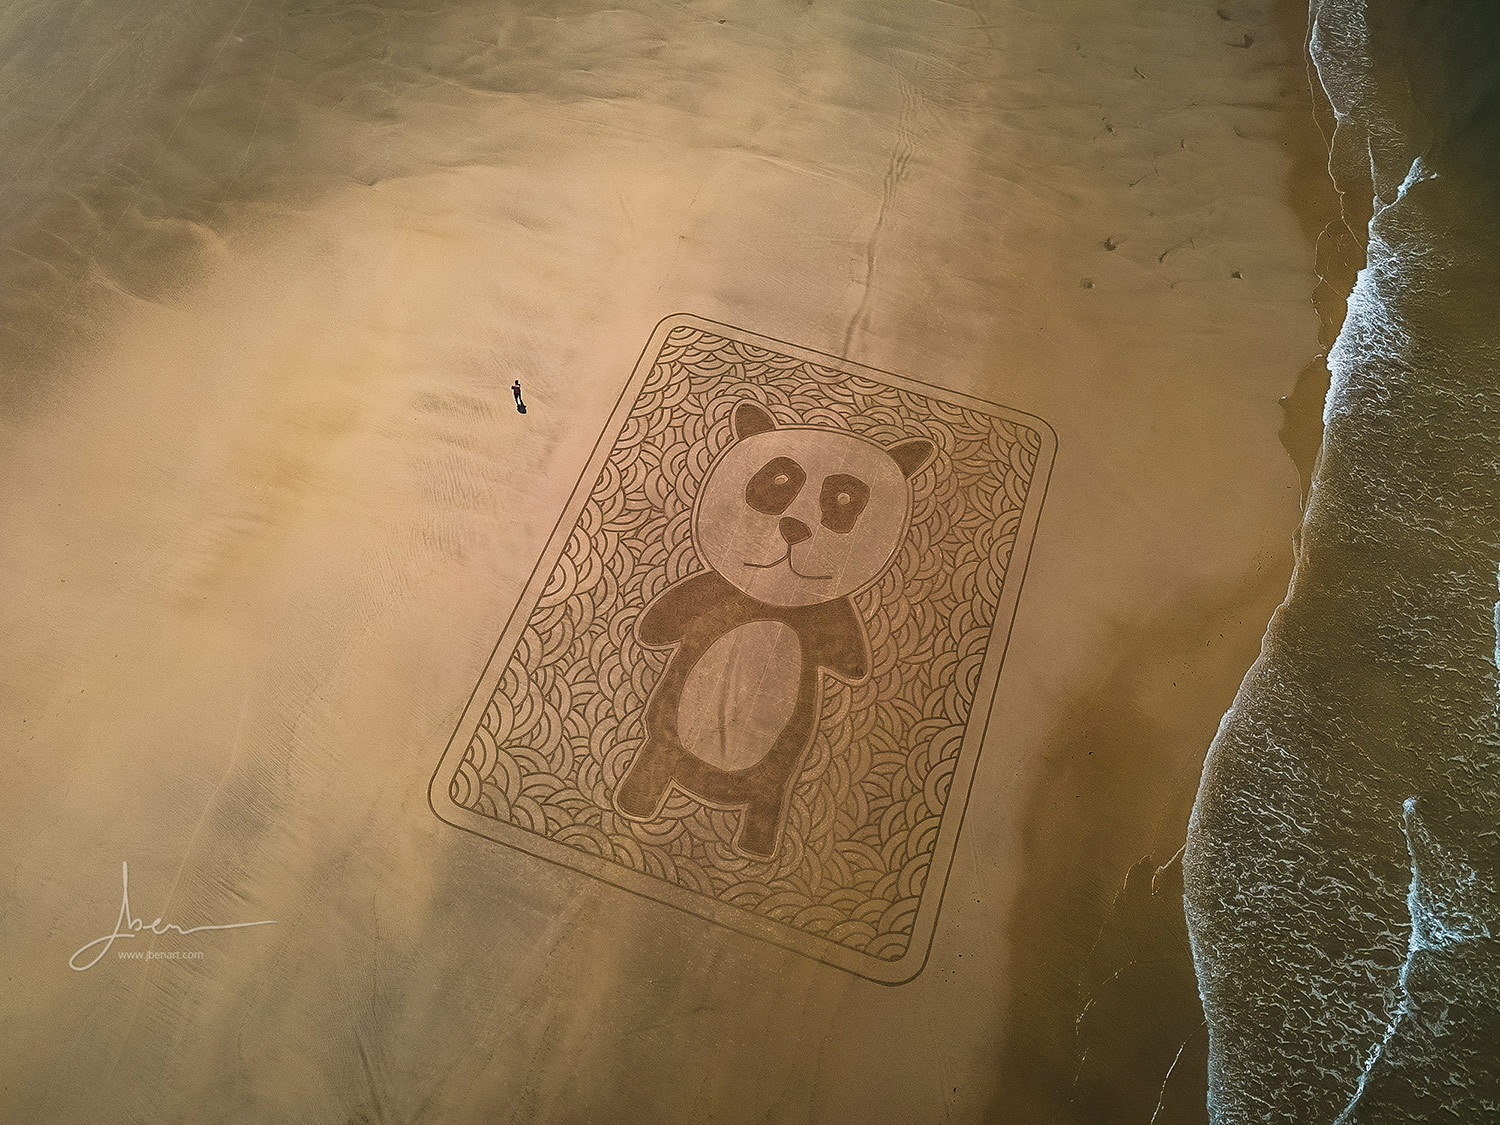 Beach art : Patient Panda Sunbathing